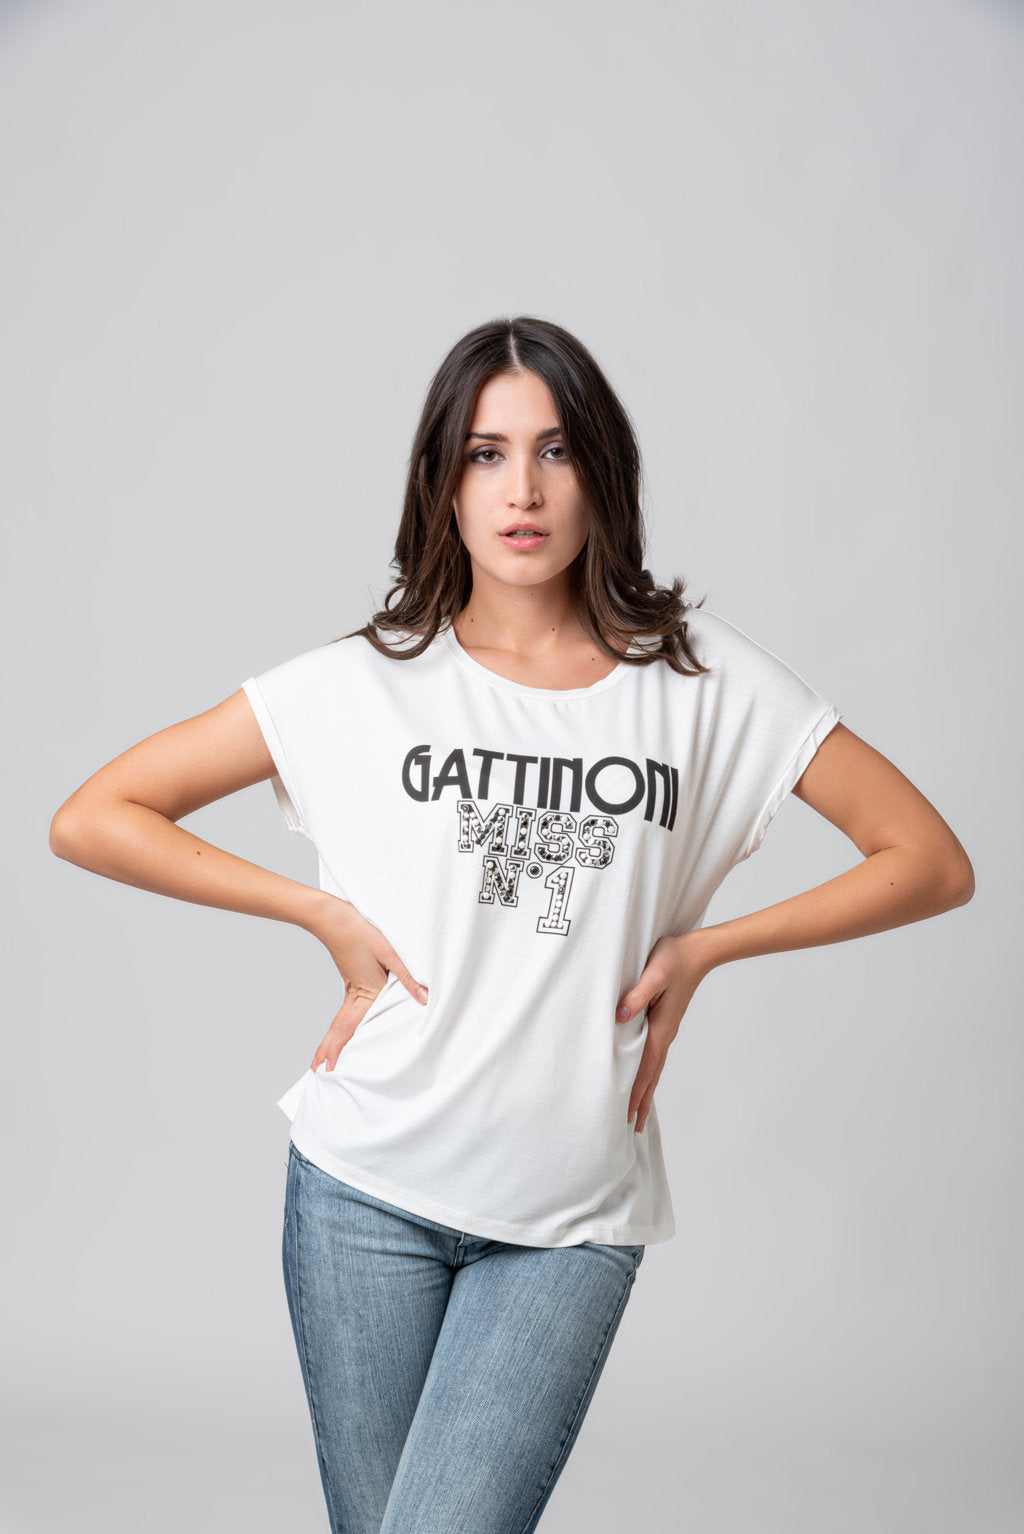 €13.00 per piece GATTINONI 9399 pieces of men's and women's clothing stock - SS 60% - FW 40% - REF. TV3973